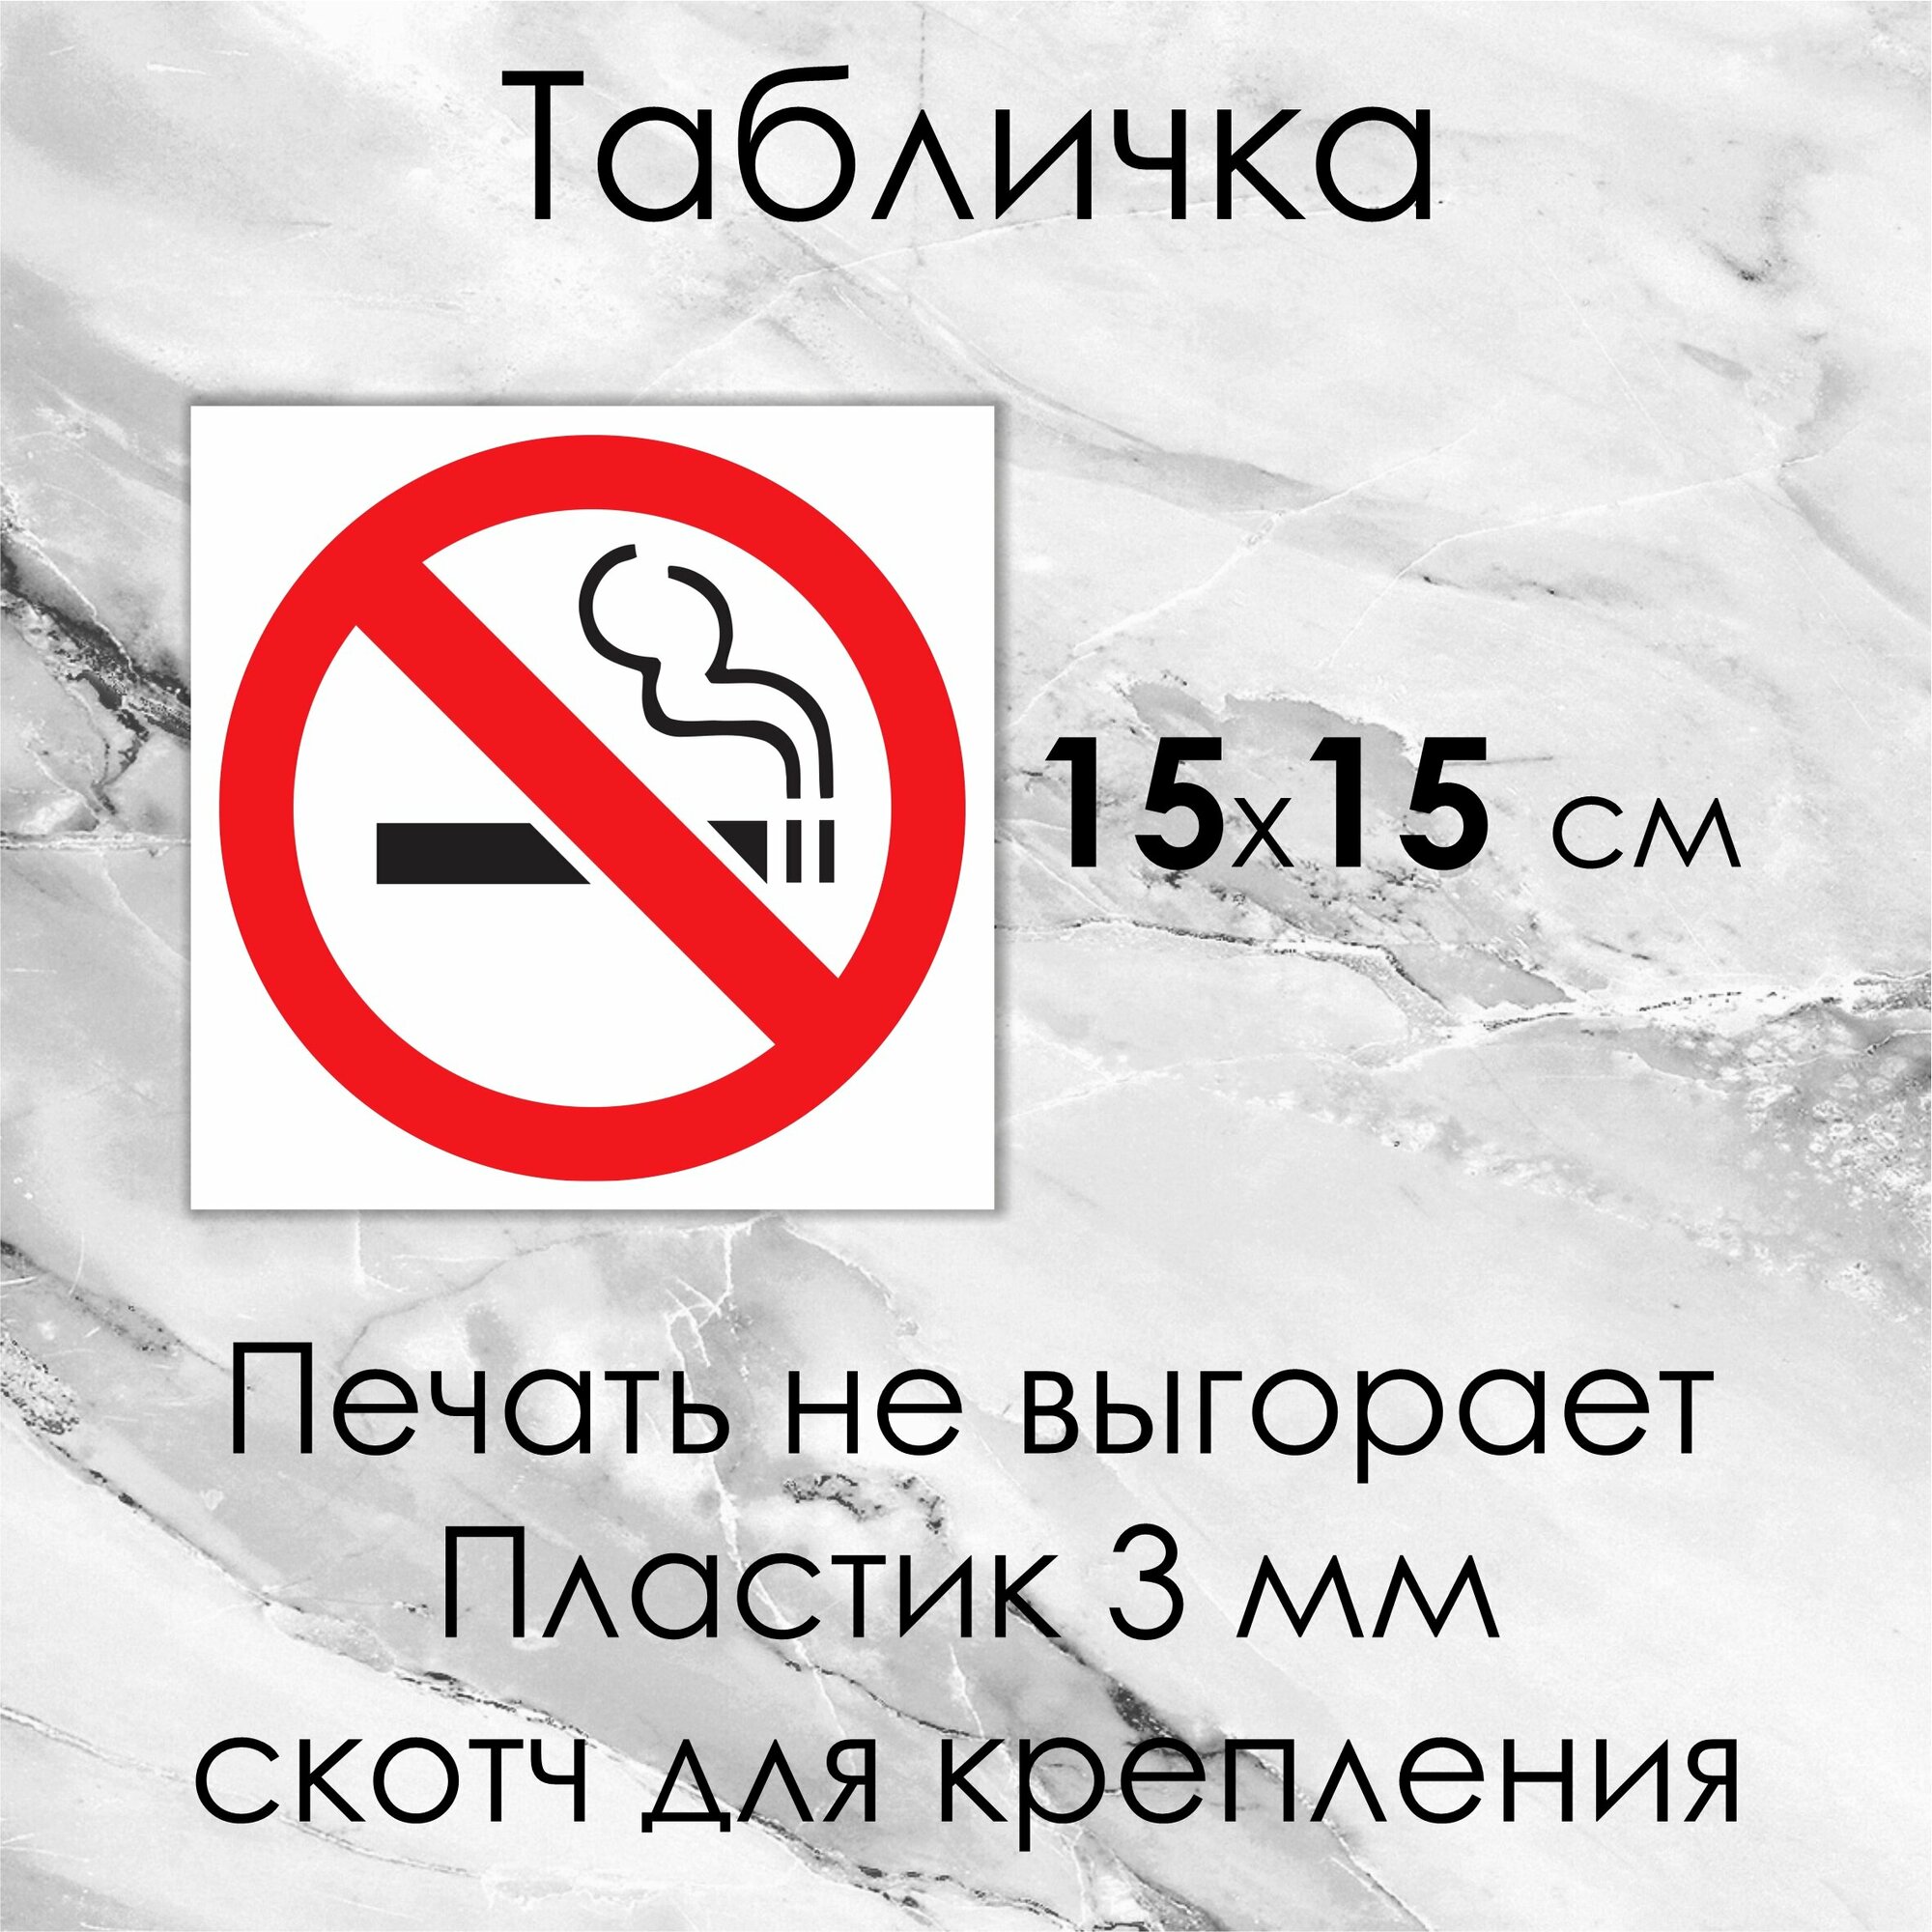 Знак "Курение Запрещено". Табличка "Не Курить" 15х15 см.